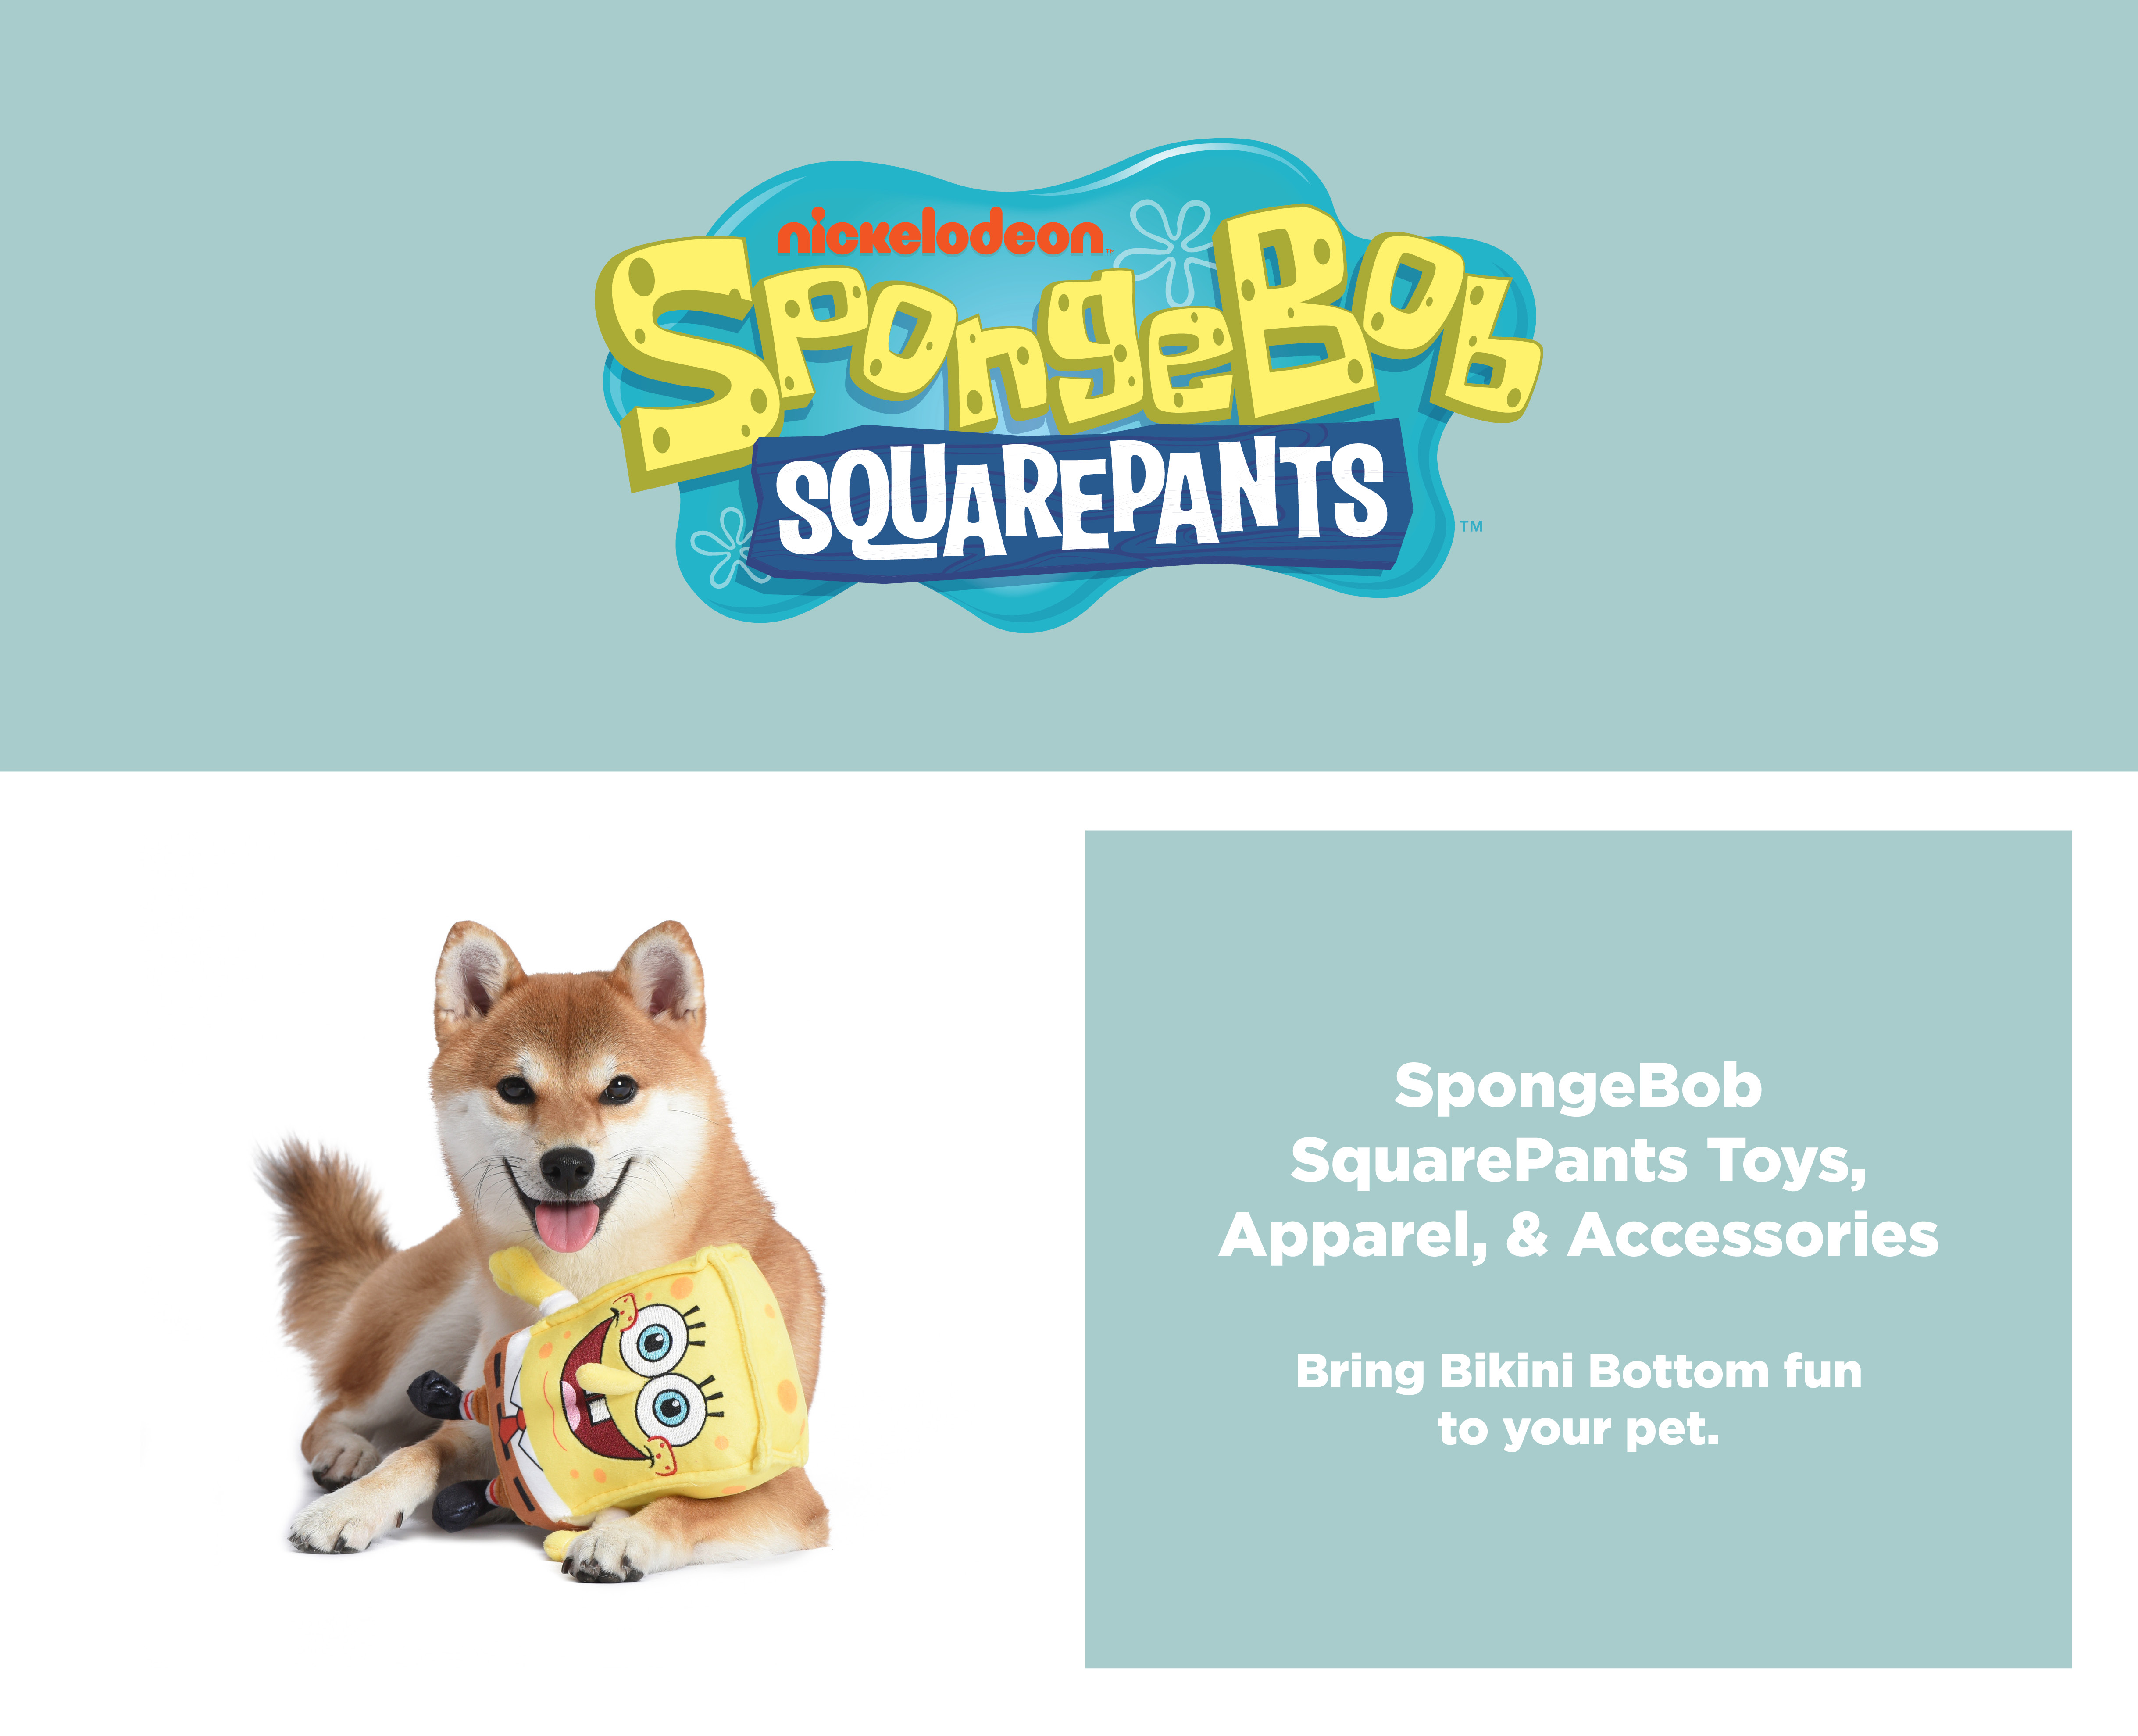 SpongeBob SquarePants for Pets